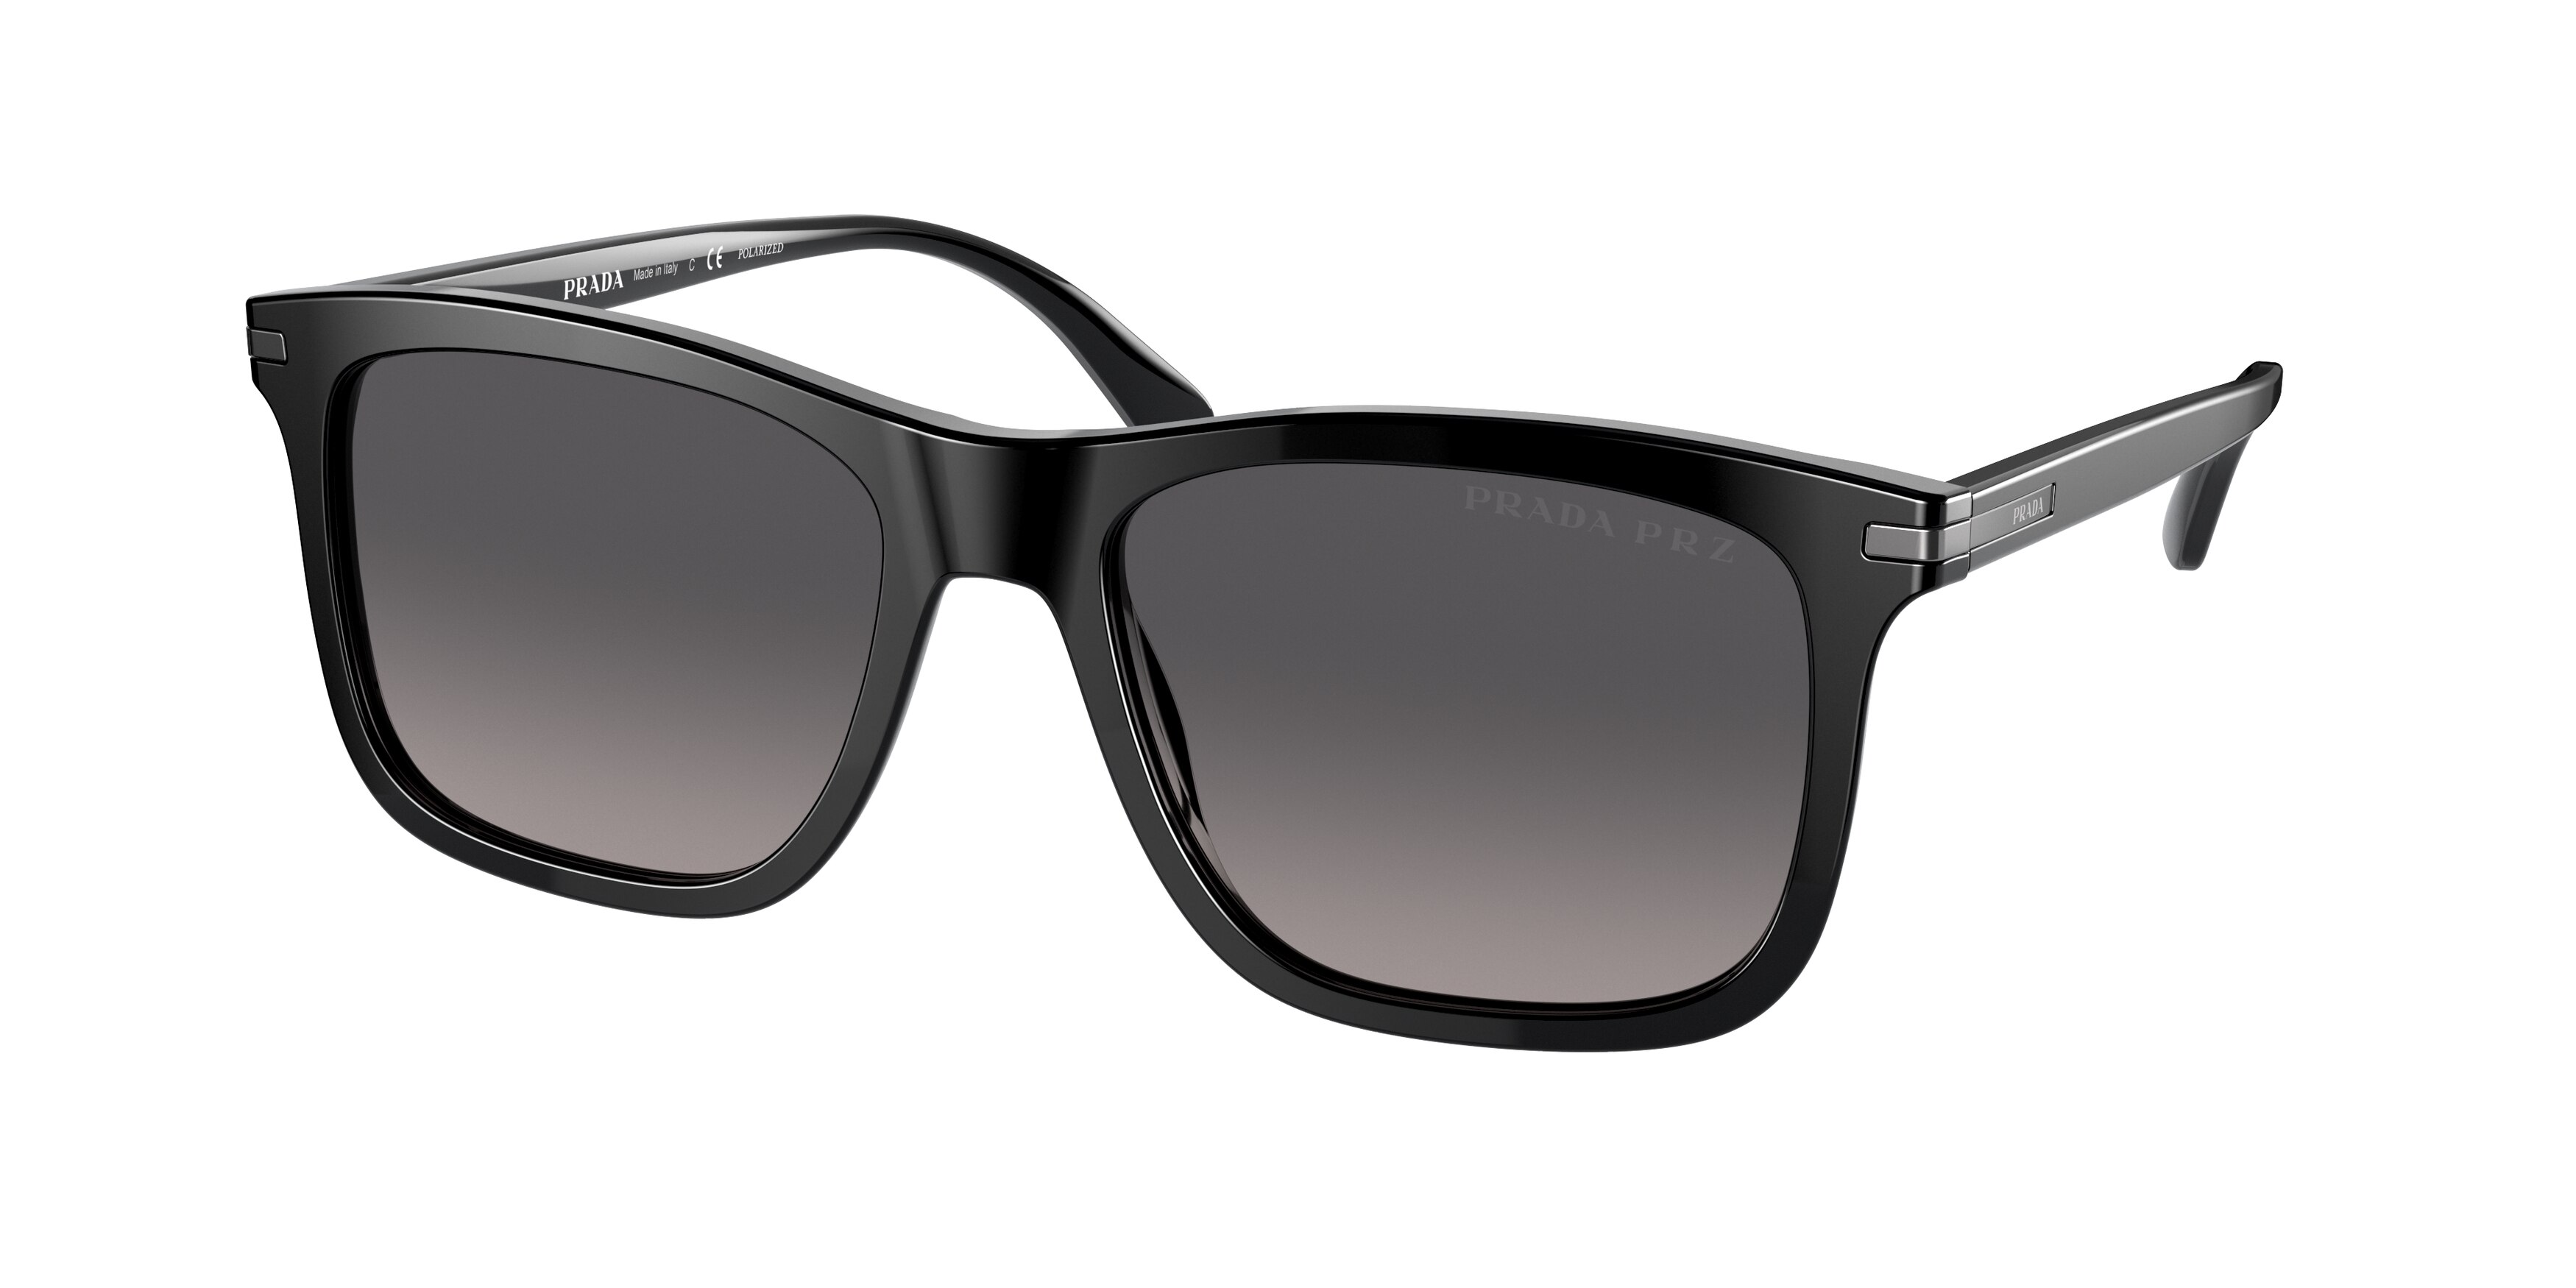 Buy Prada Sunglasses directly from OpticsFast.com